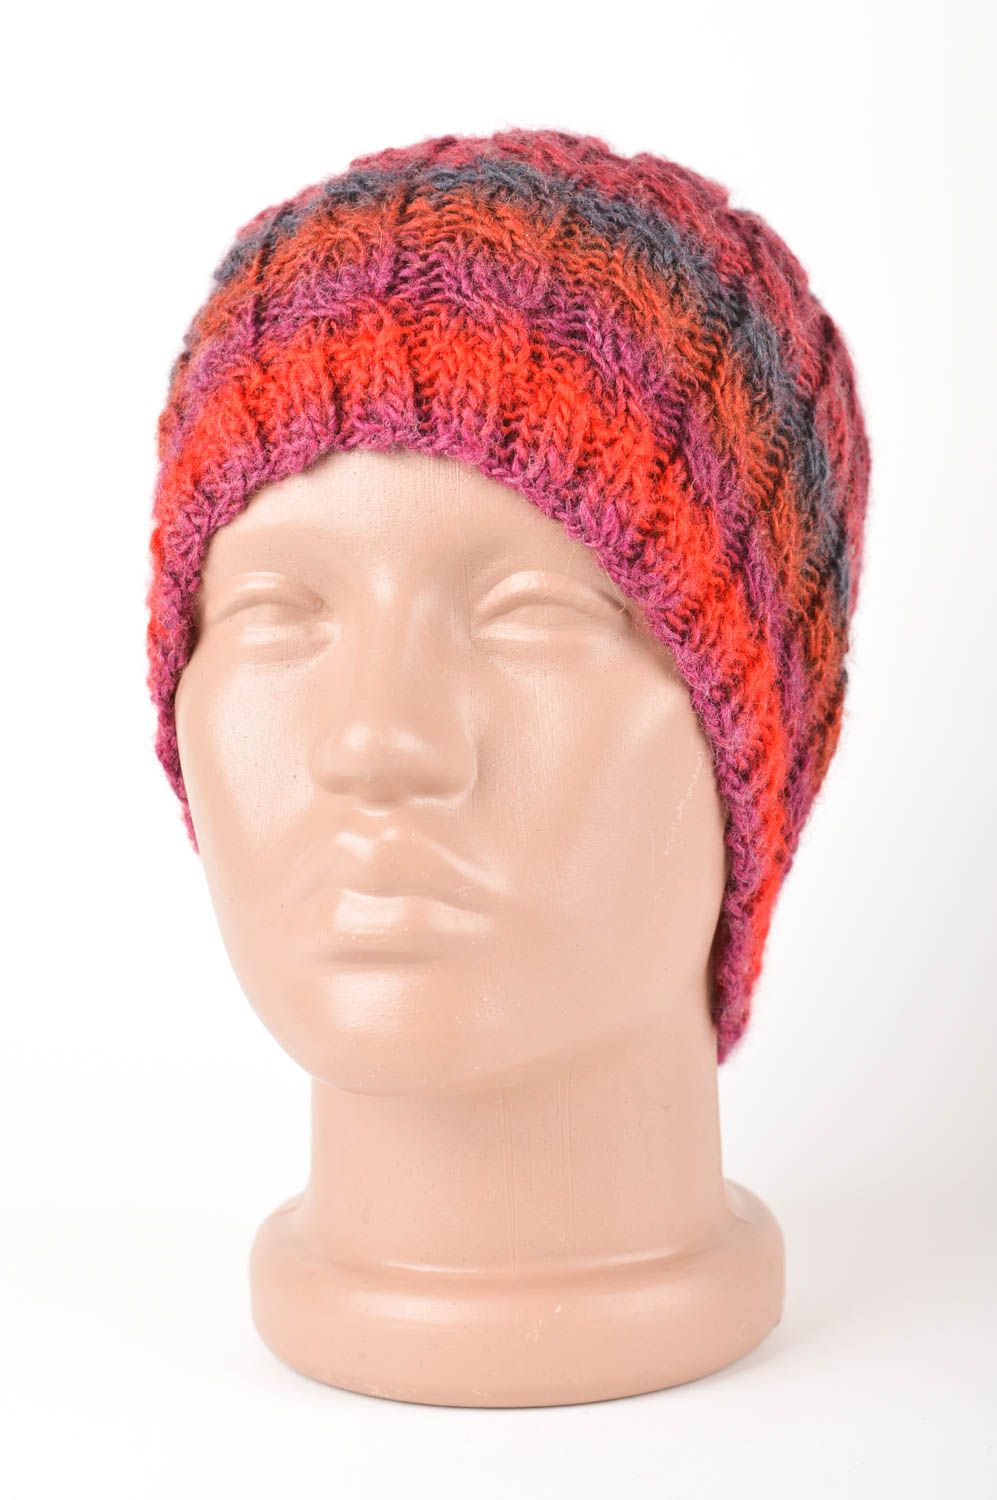 Handmade crochet hat fashion hats winter hats for women best gifts for women photo 1